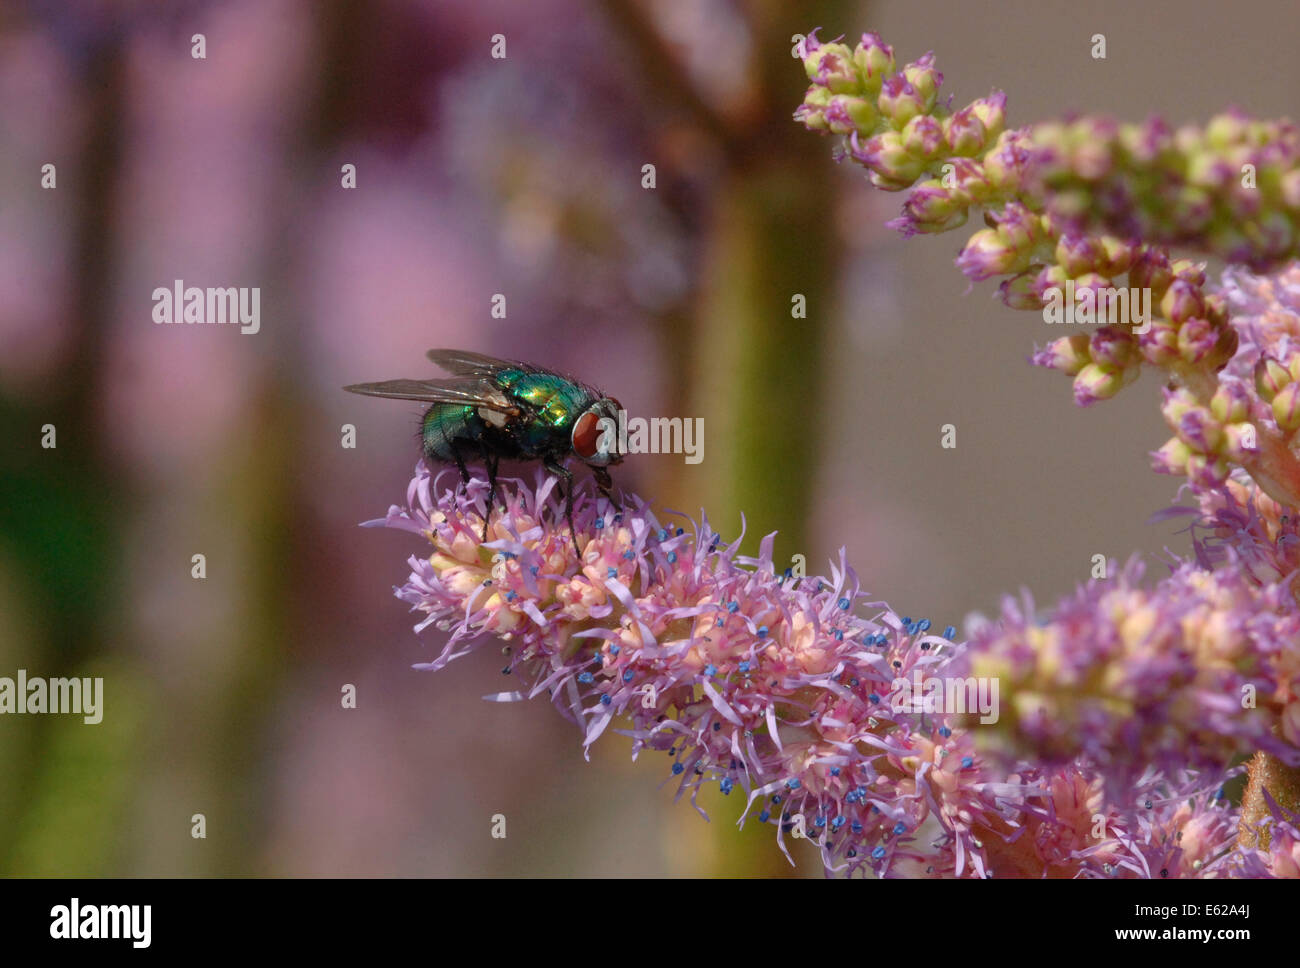 Greenbottle Fly (Lucilia caesar) On Astilbe Flowers. Stock Photo